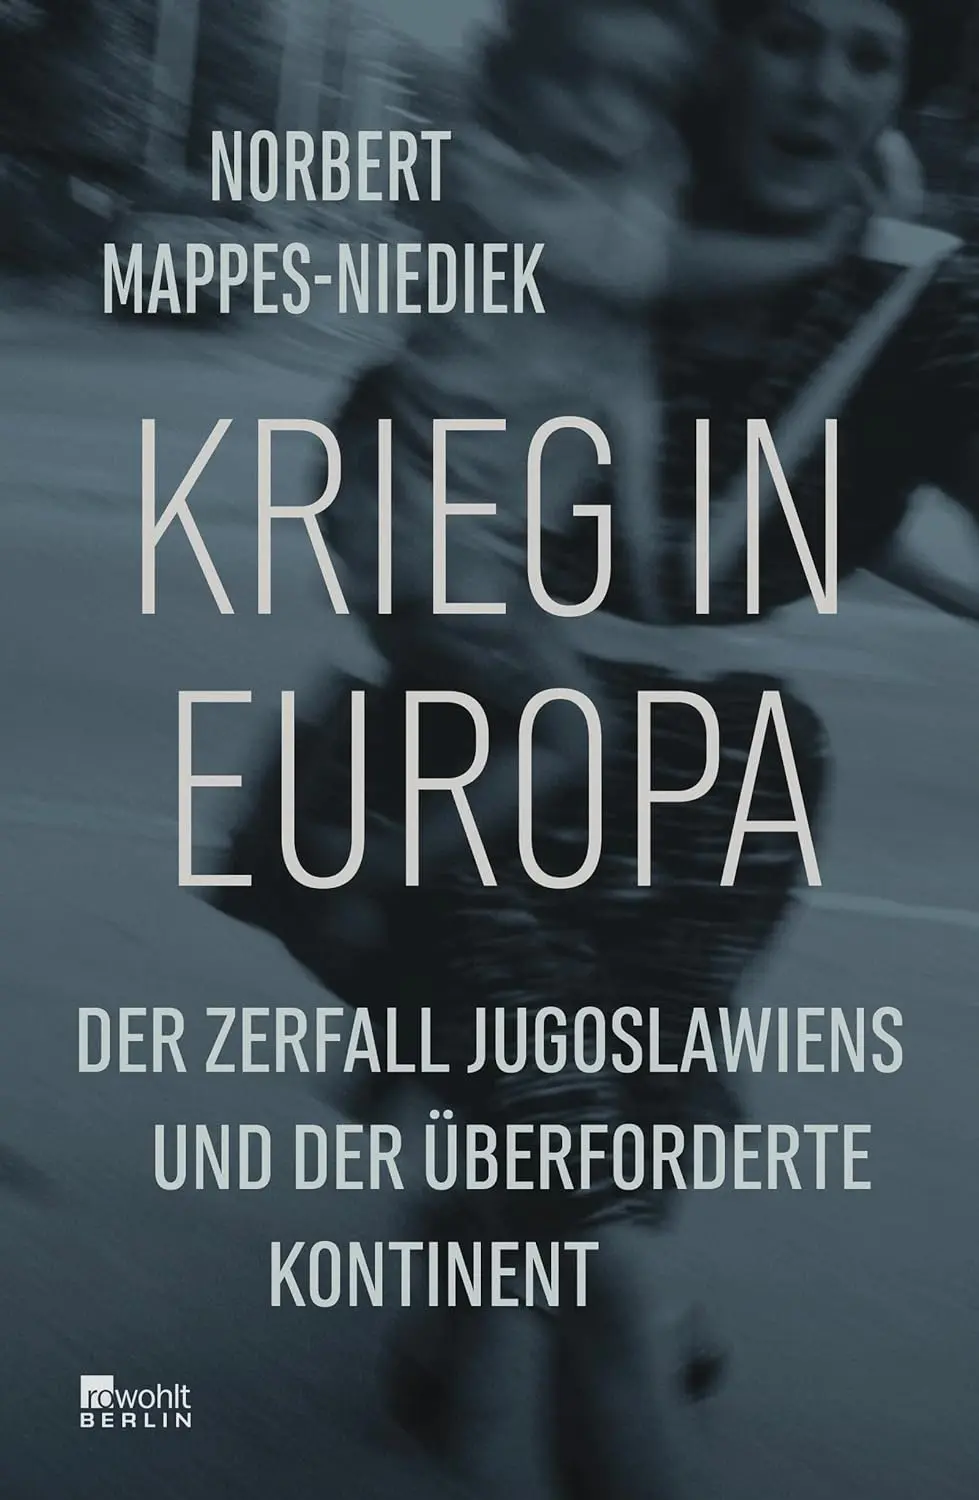 Buchcover: Krieg in Europa von Norbert Mappes-Niediek